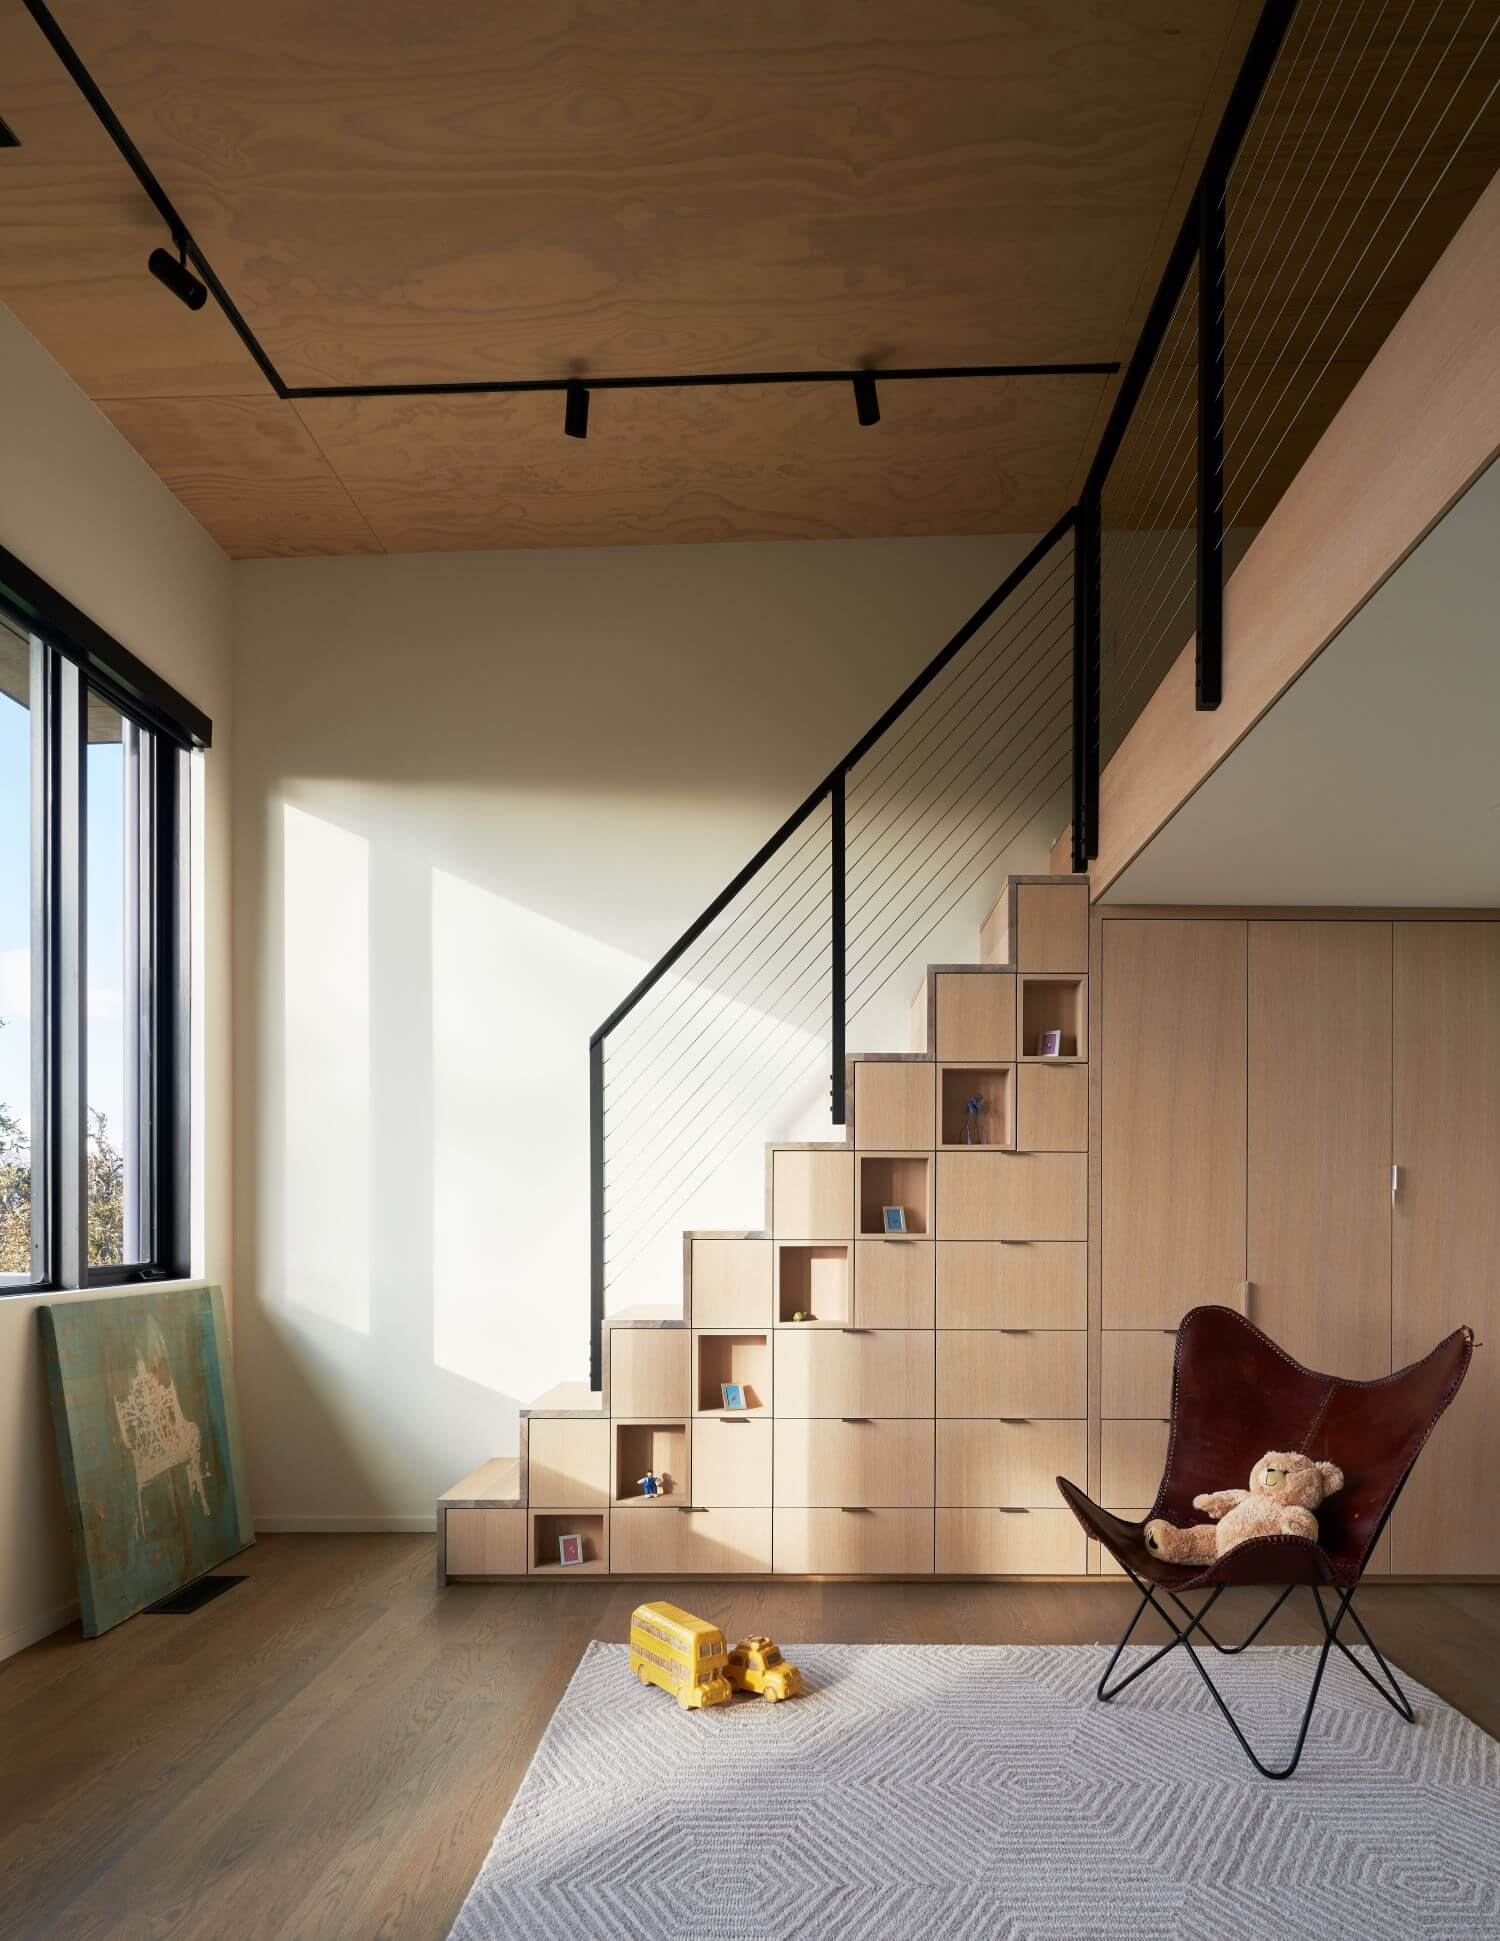 Ueda Design Studio reveals the Eola Hill|Houses